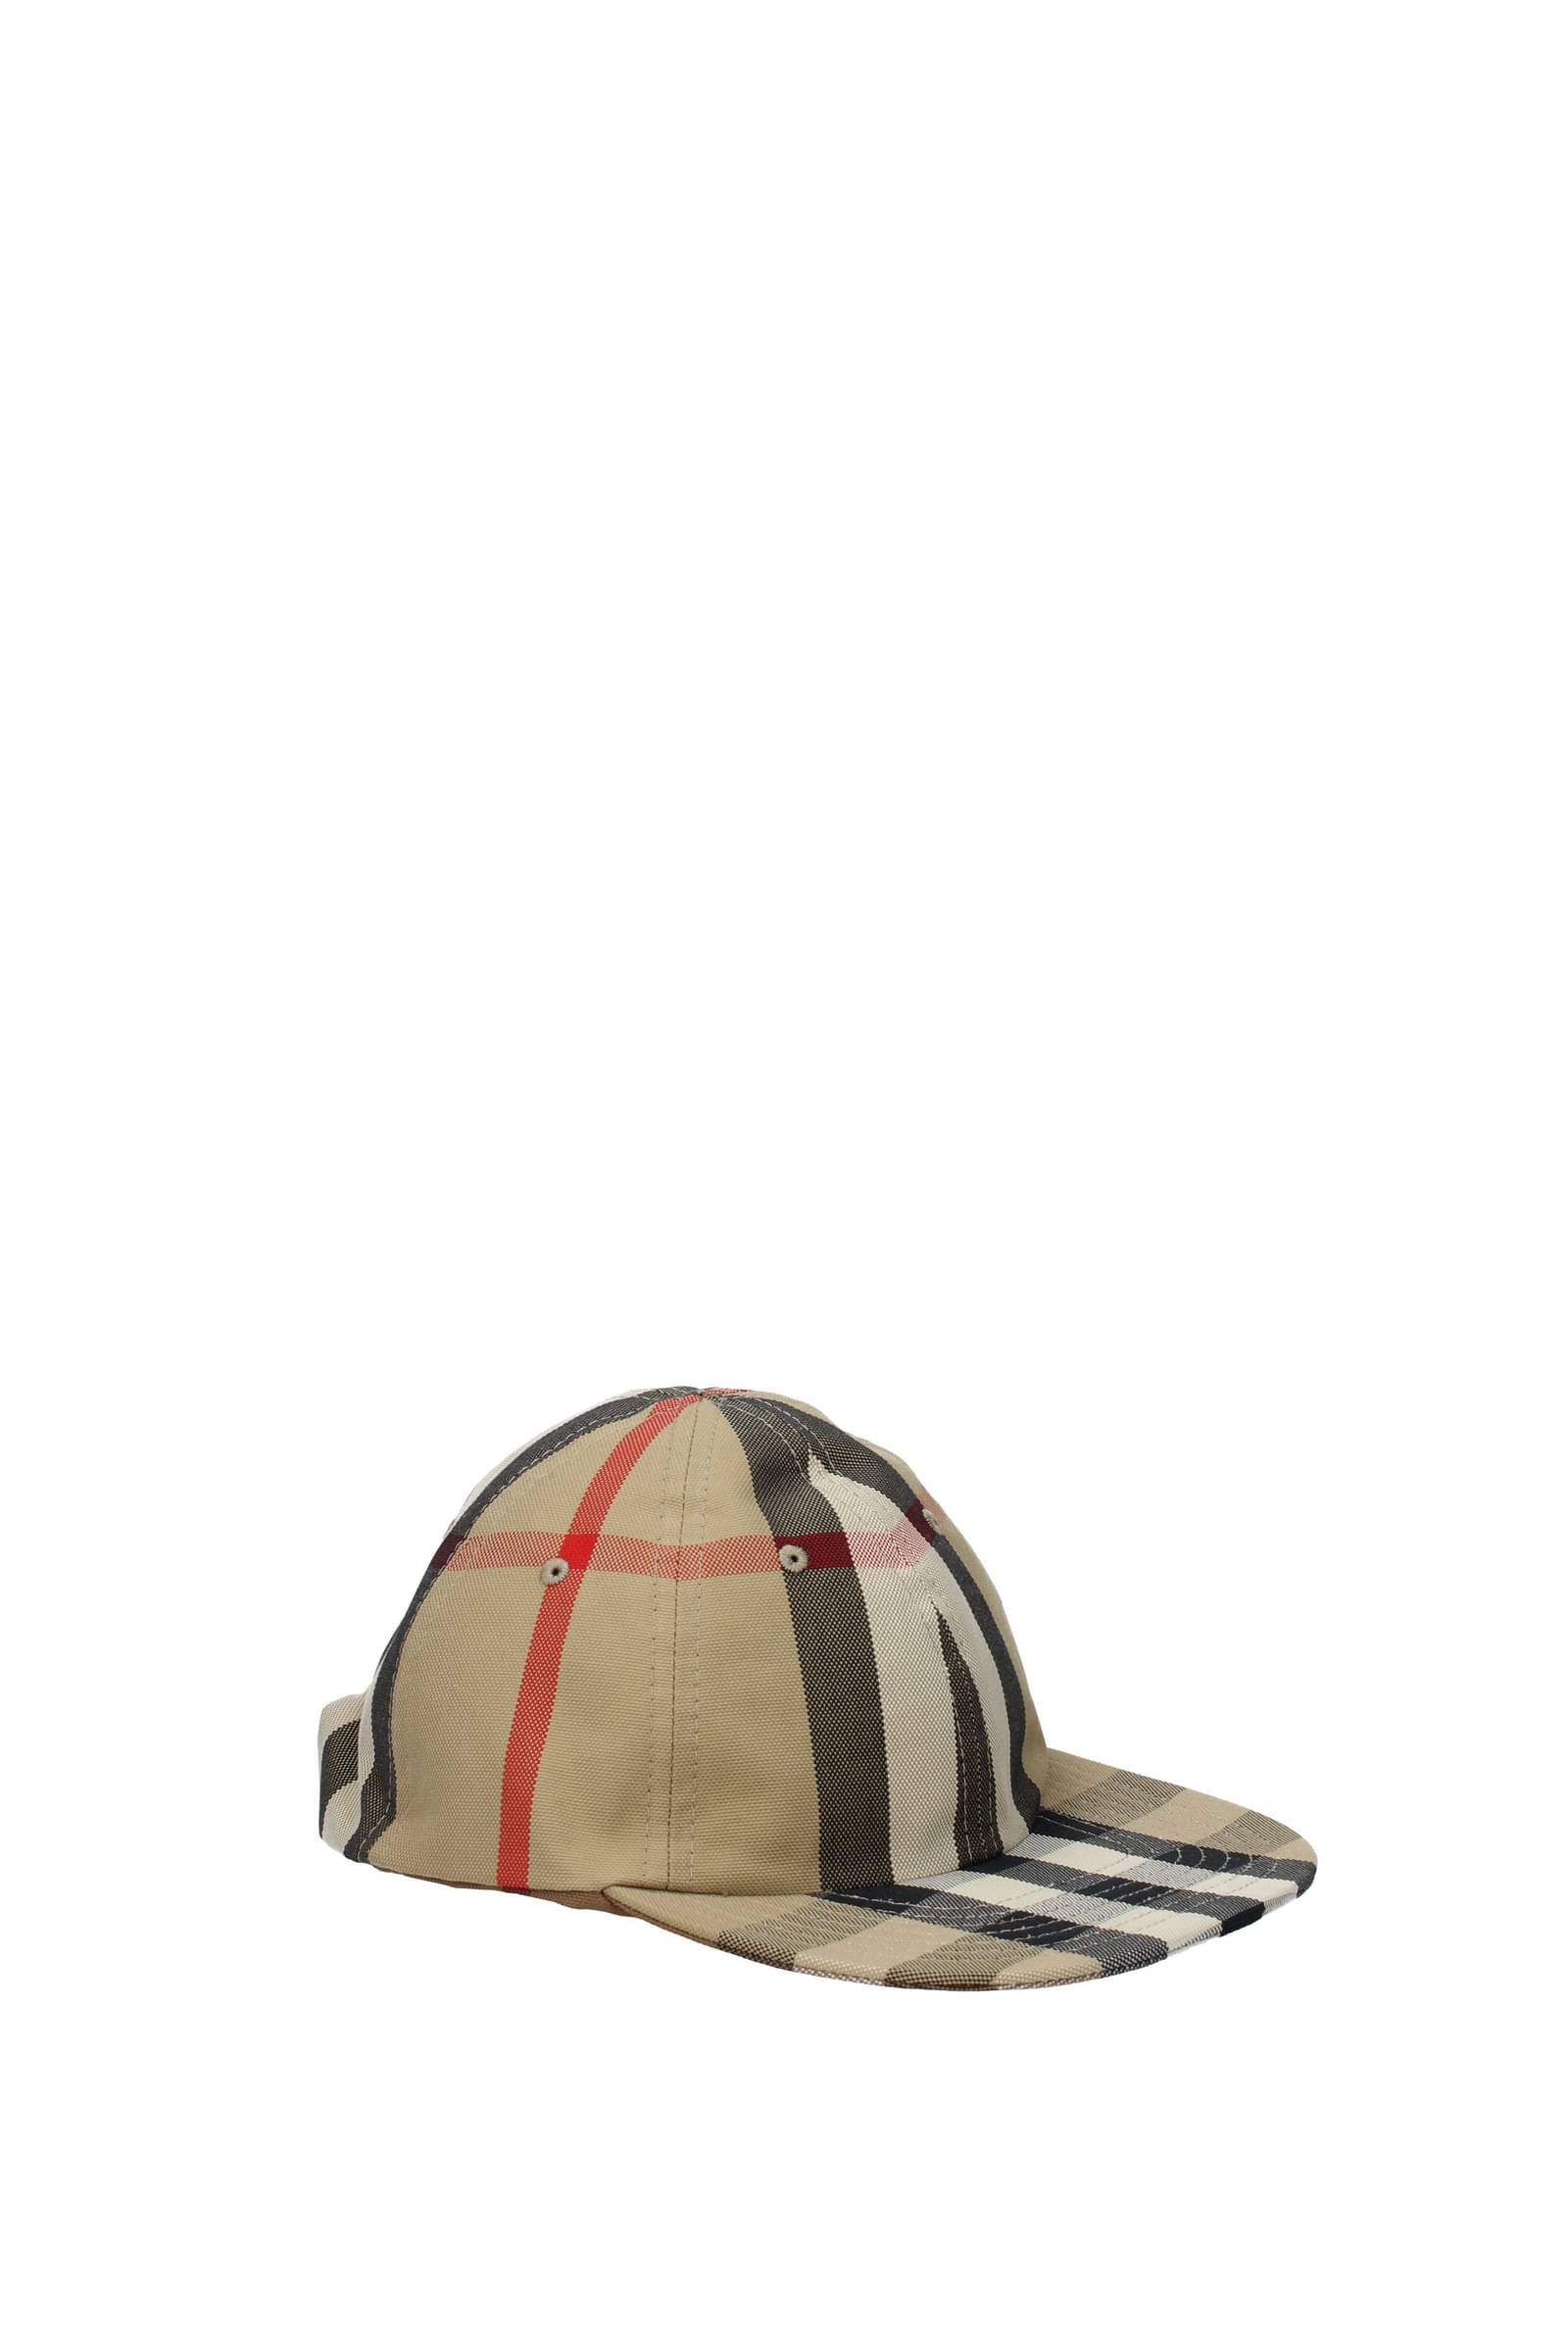 Burberry帽子